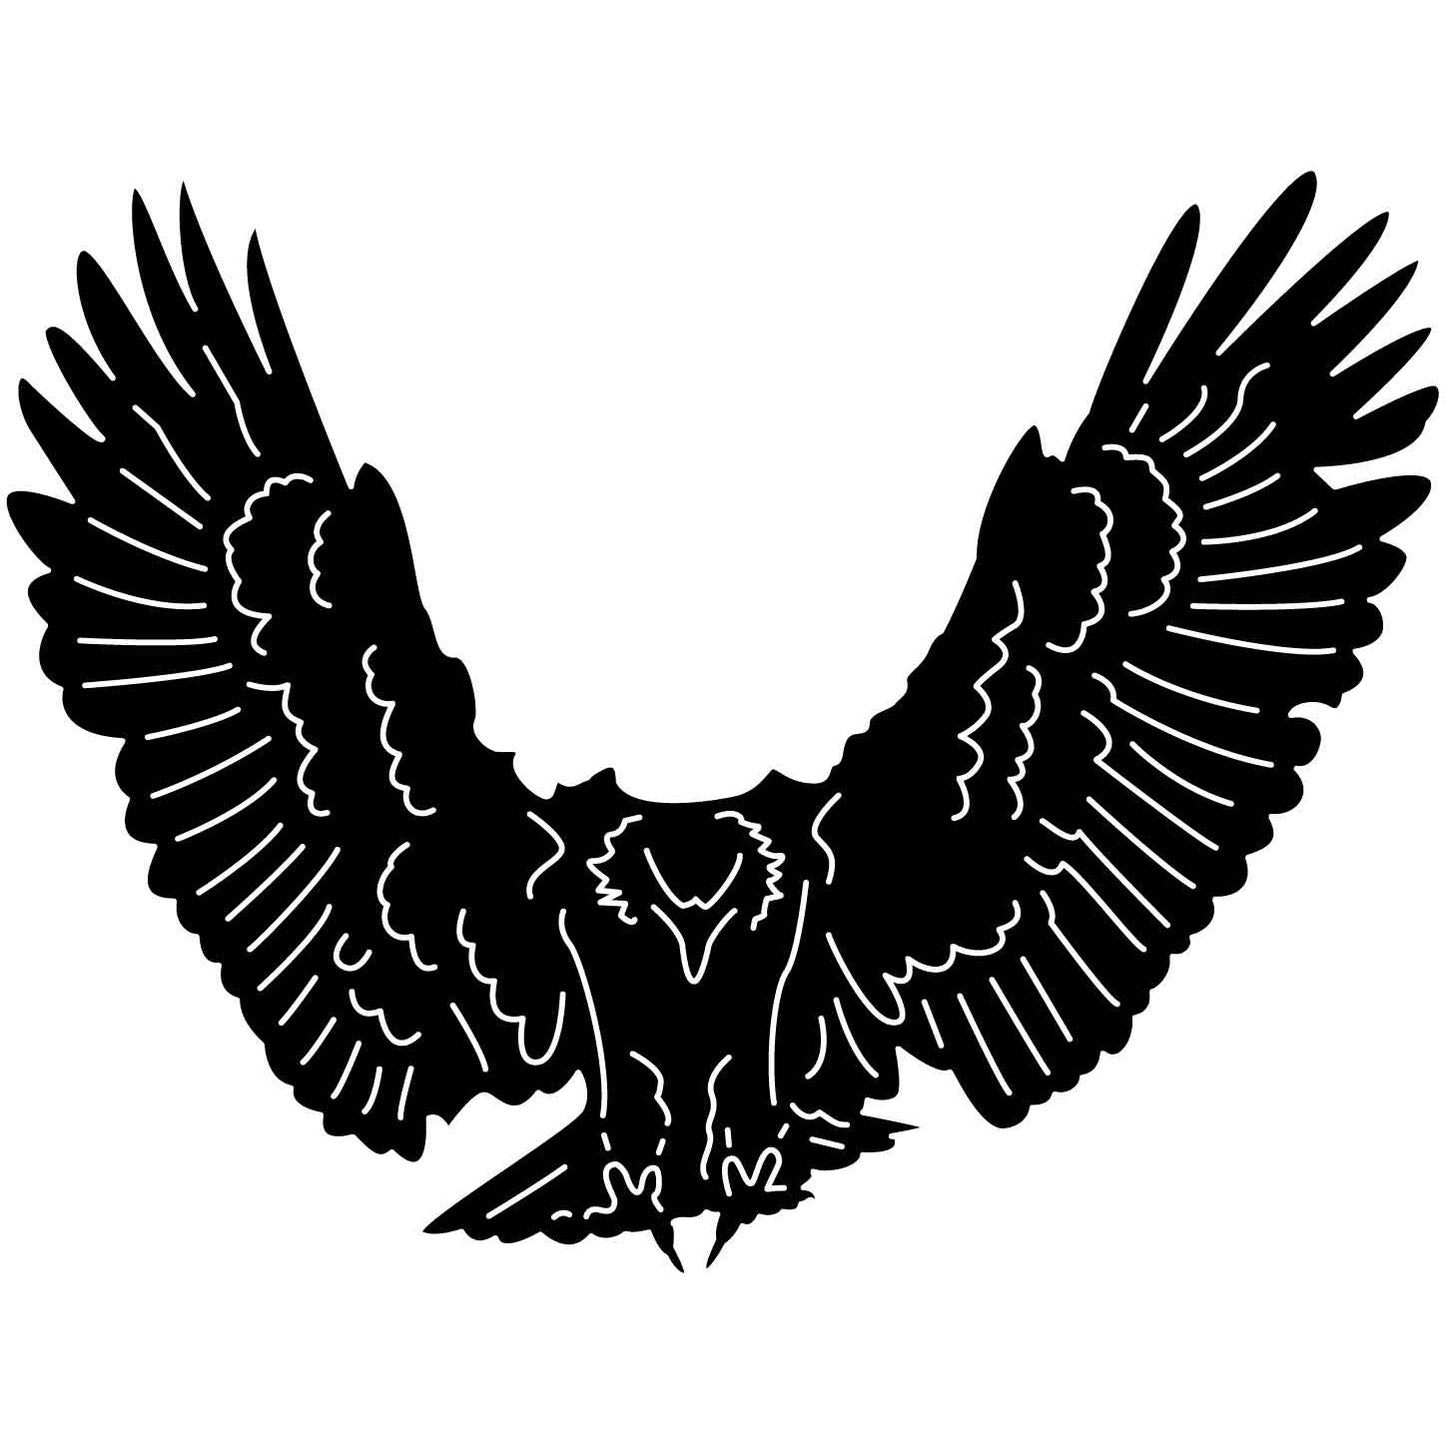 Bald Eagles Falcons and Hawks 07